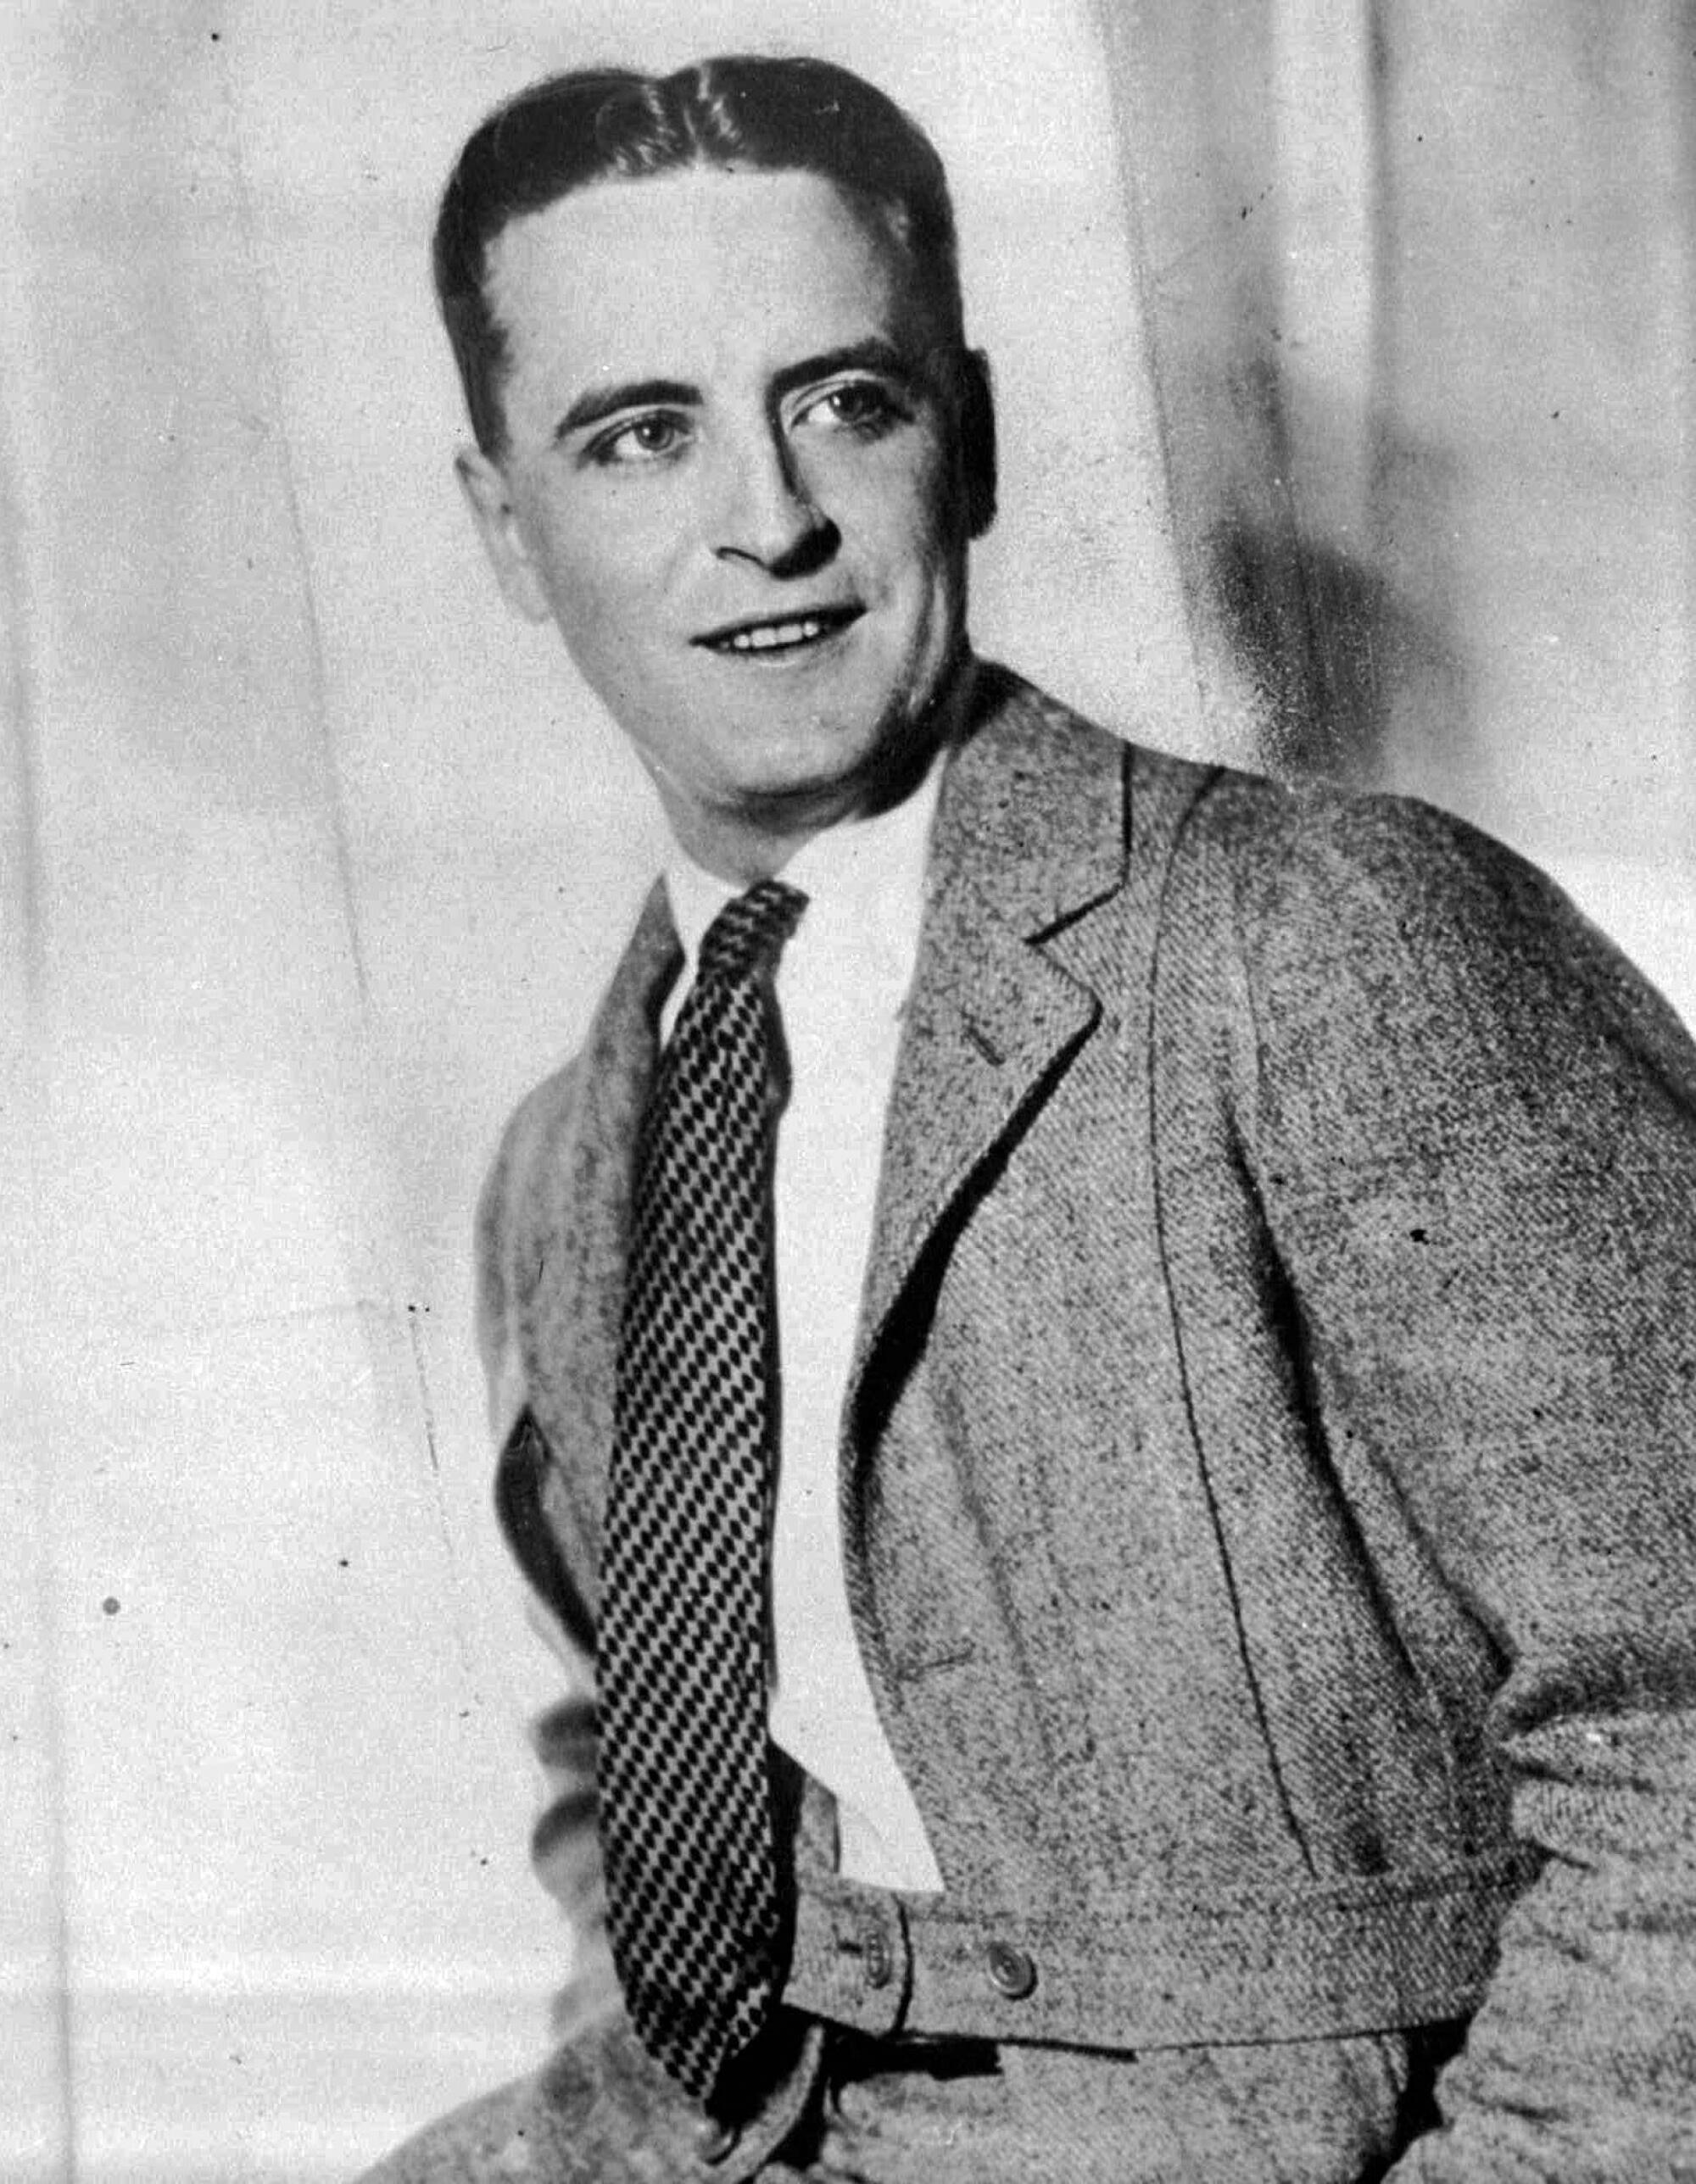 1920s photo of writer F. Scott Fitzgerald